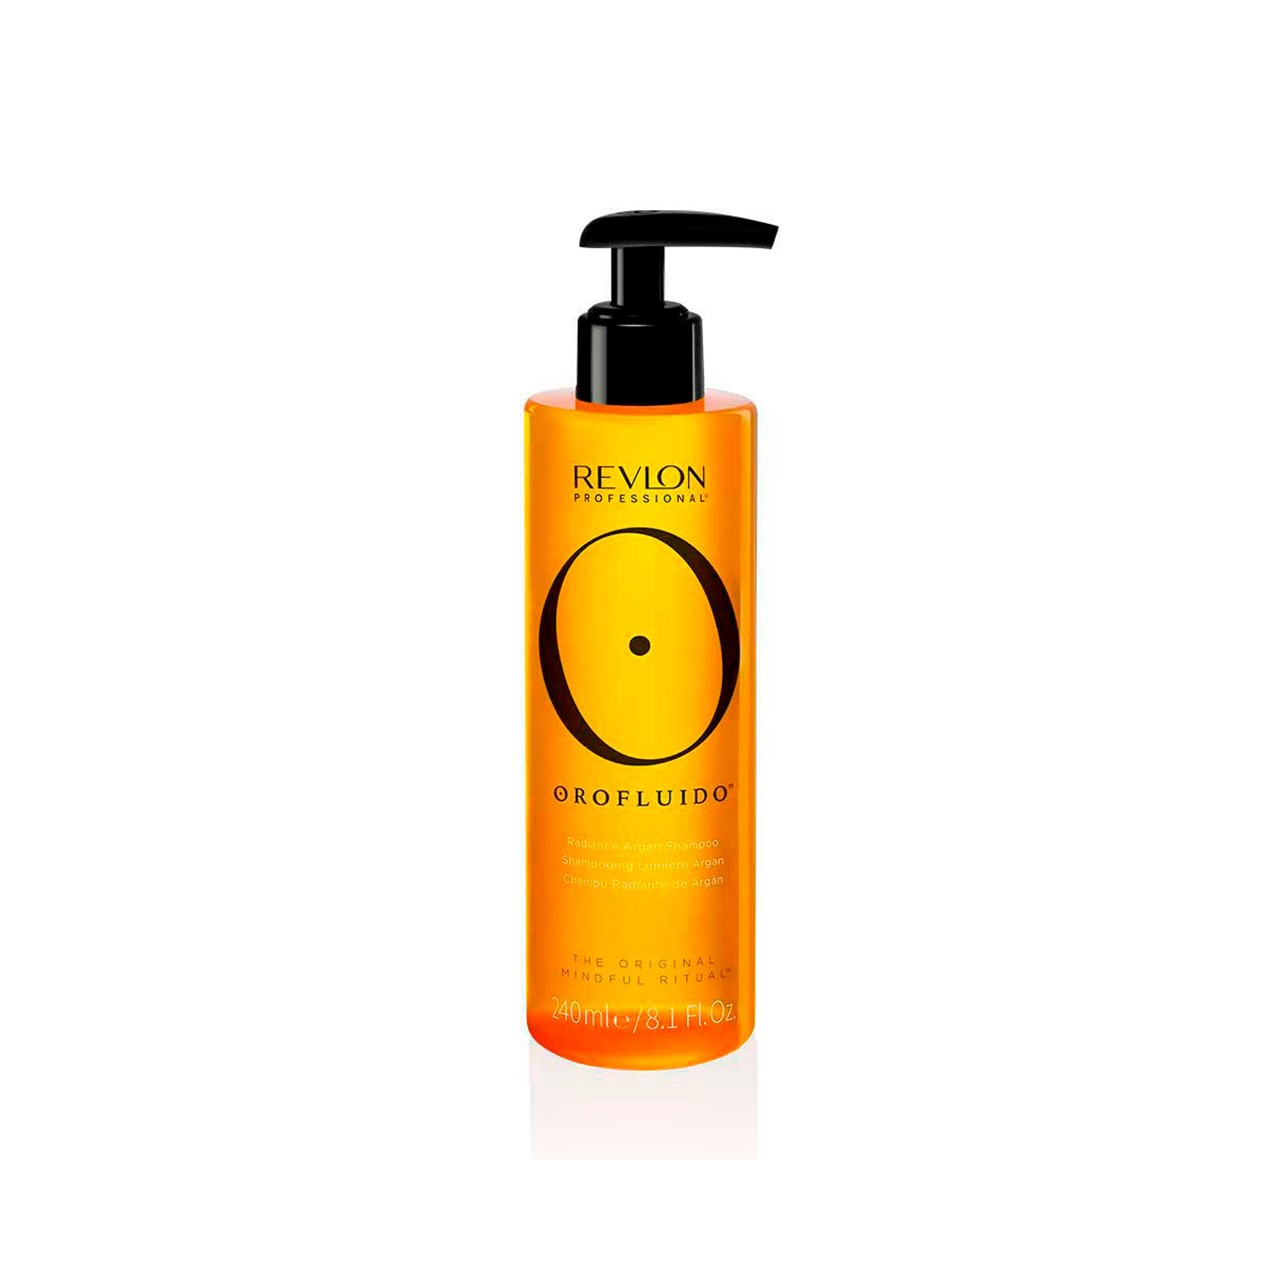 Revlon Professional Orofluido Radiance Argan Shampoo 240ml